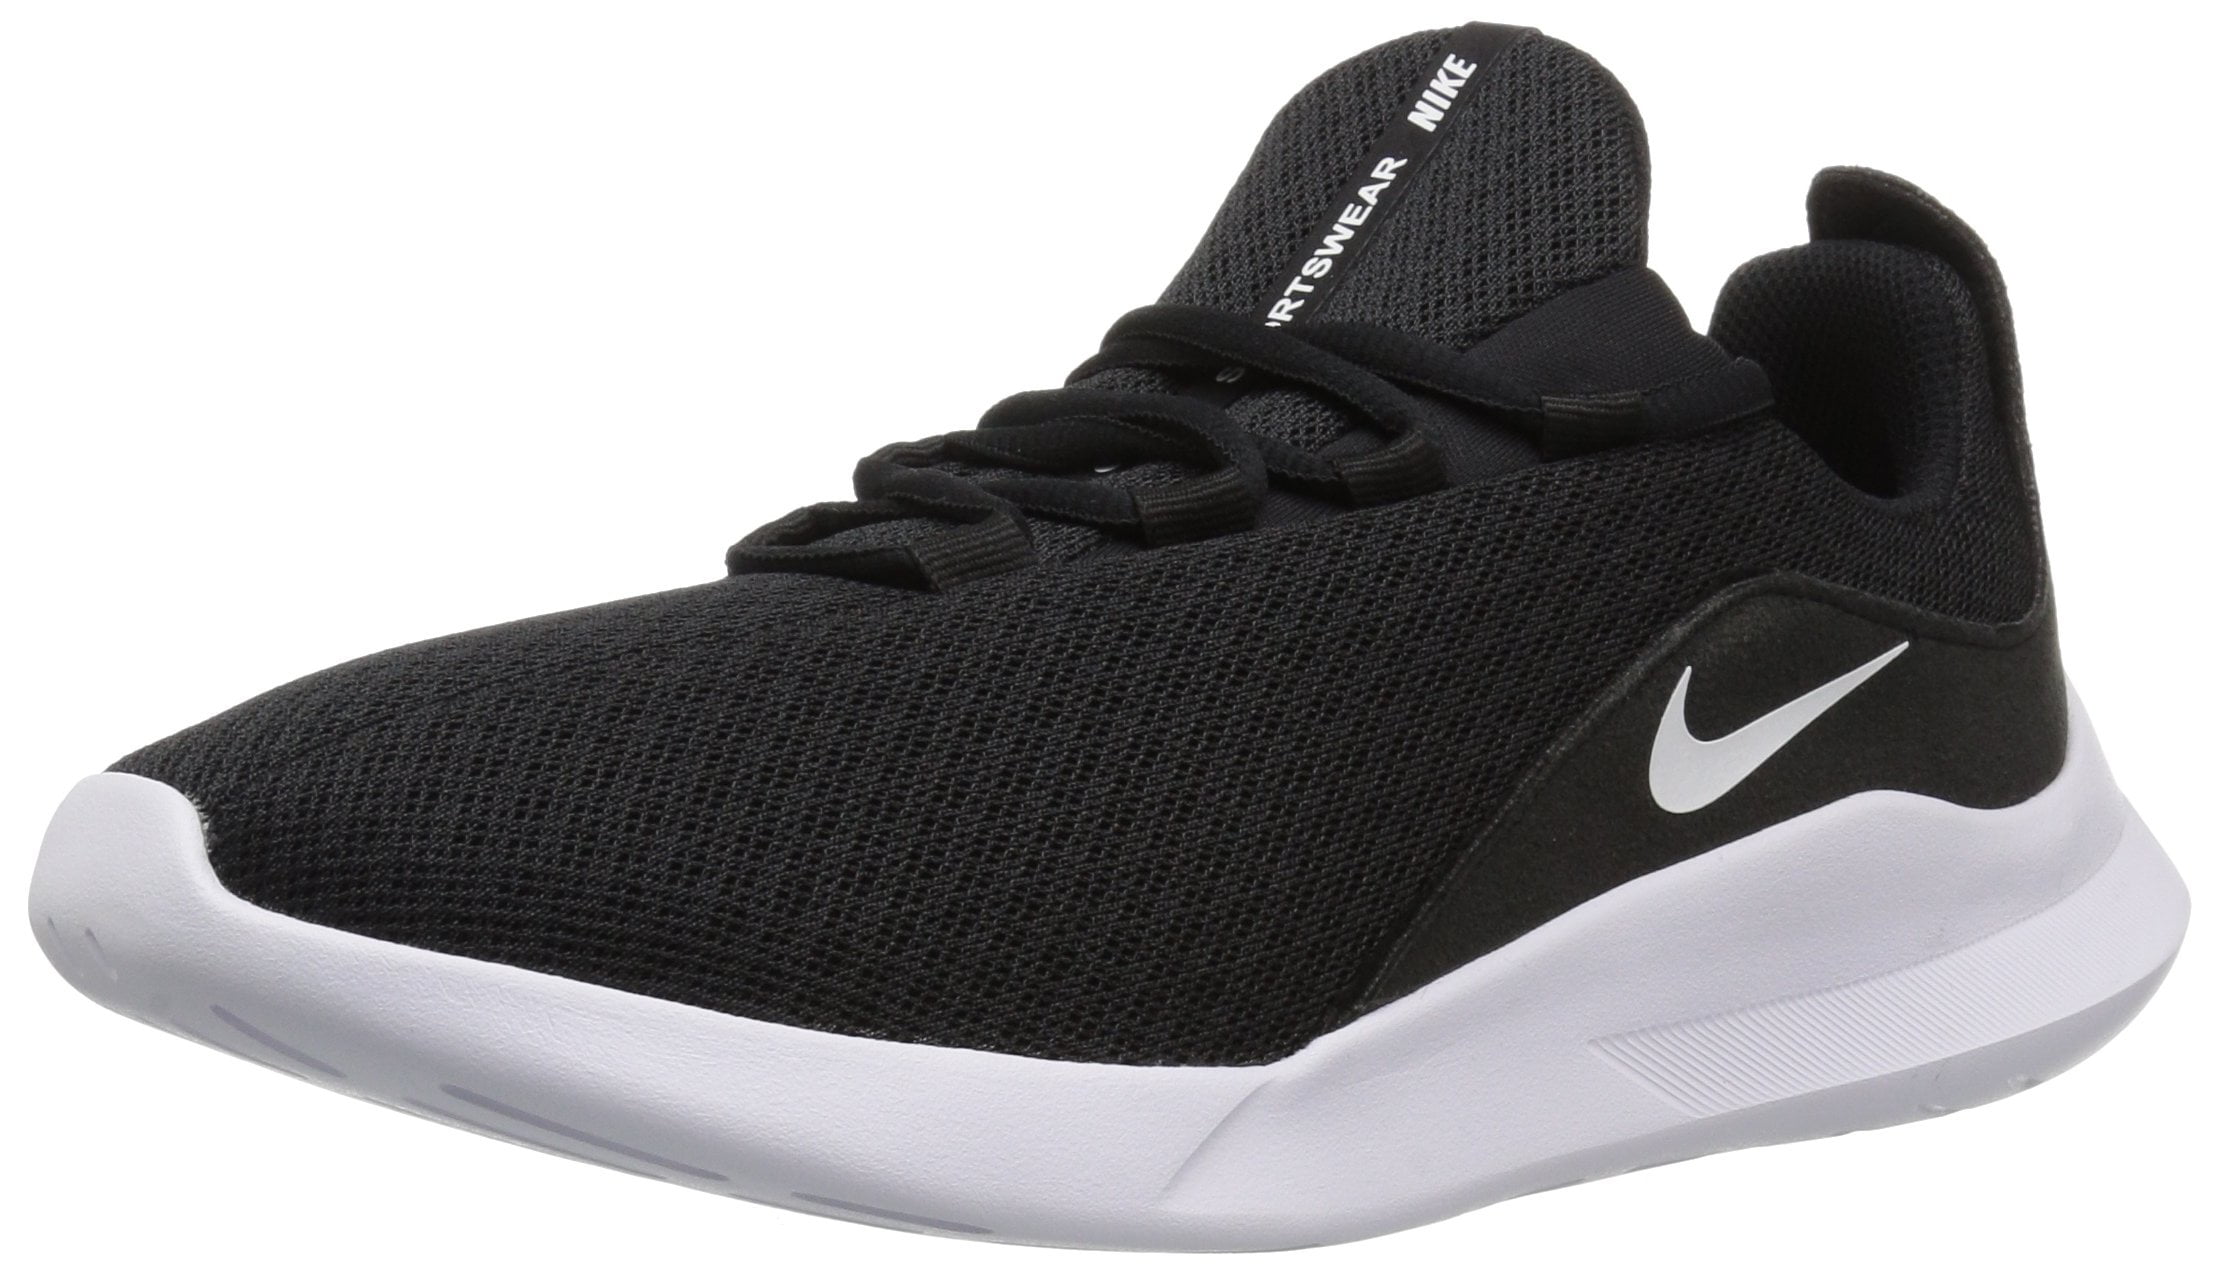 Nike Women's Running Shoe, Black/White, 5.5 Regular US - Walmart.com